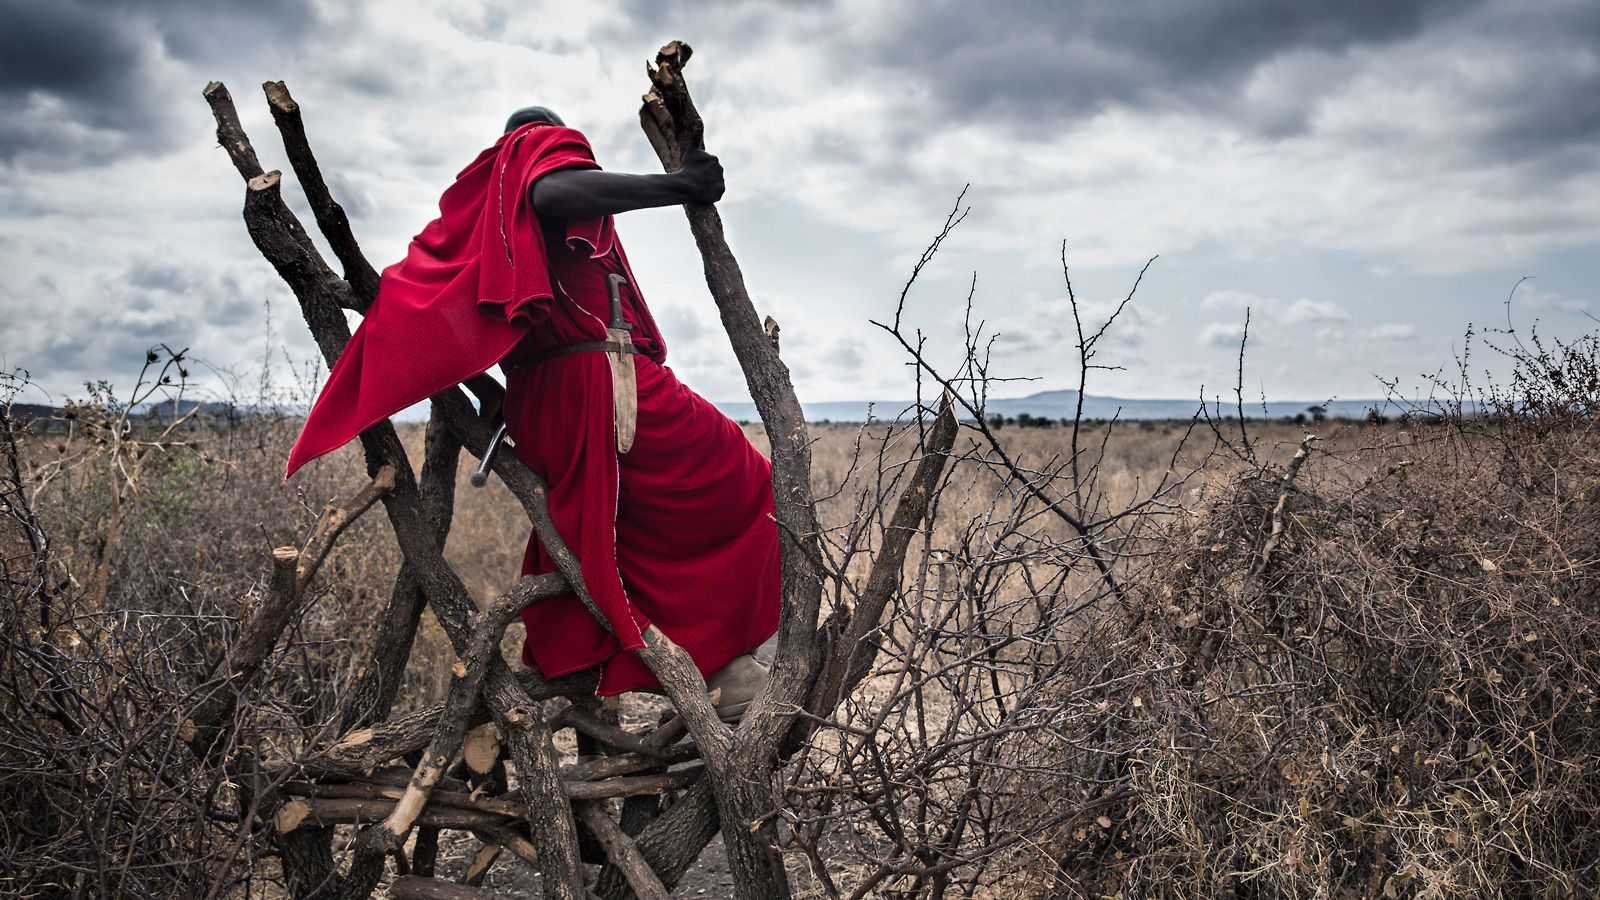 Masaai - photo by Nelli Huié